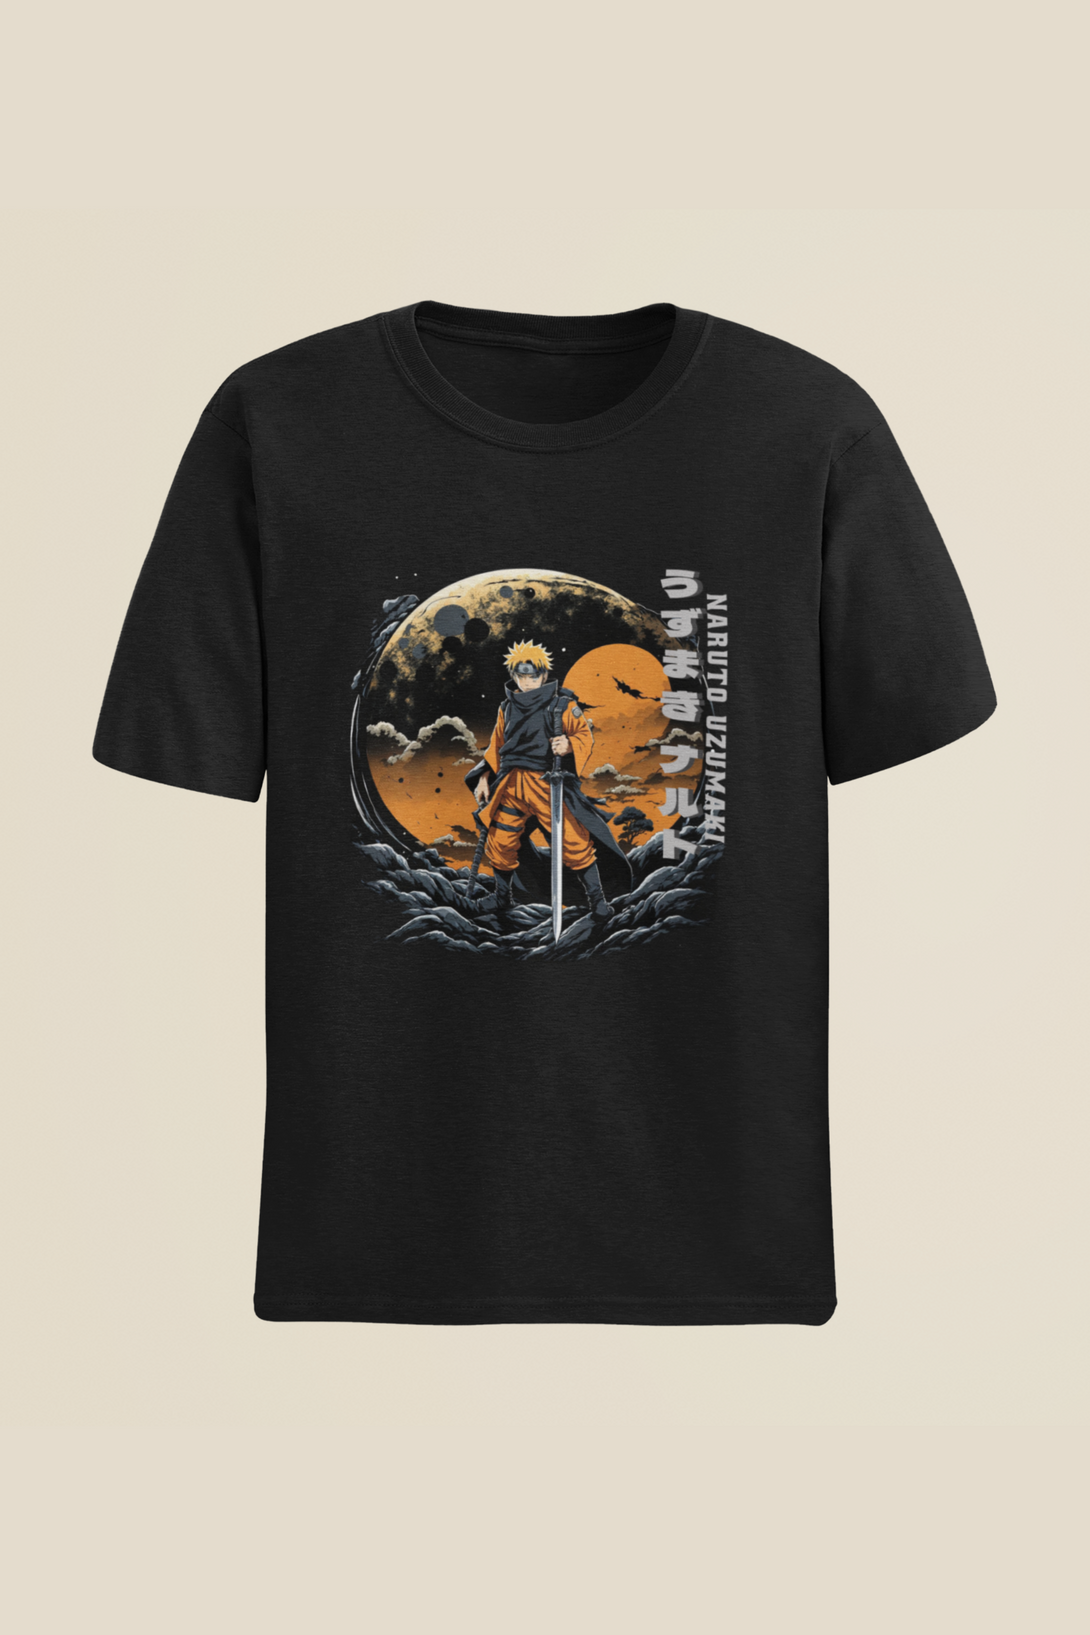 Anime Naruto Black Printed Oversized T-Shirt For Men - WowWaves - 2